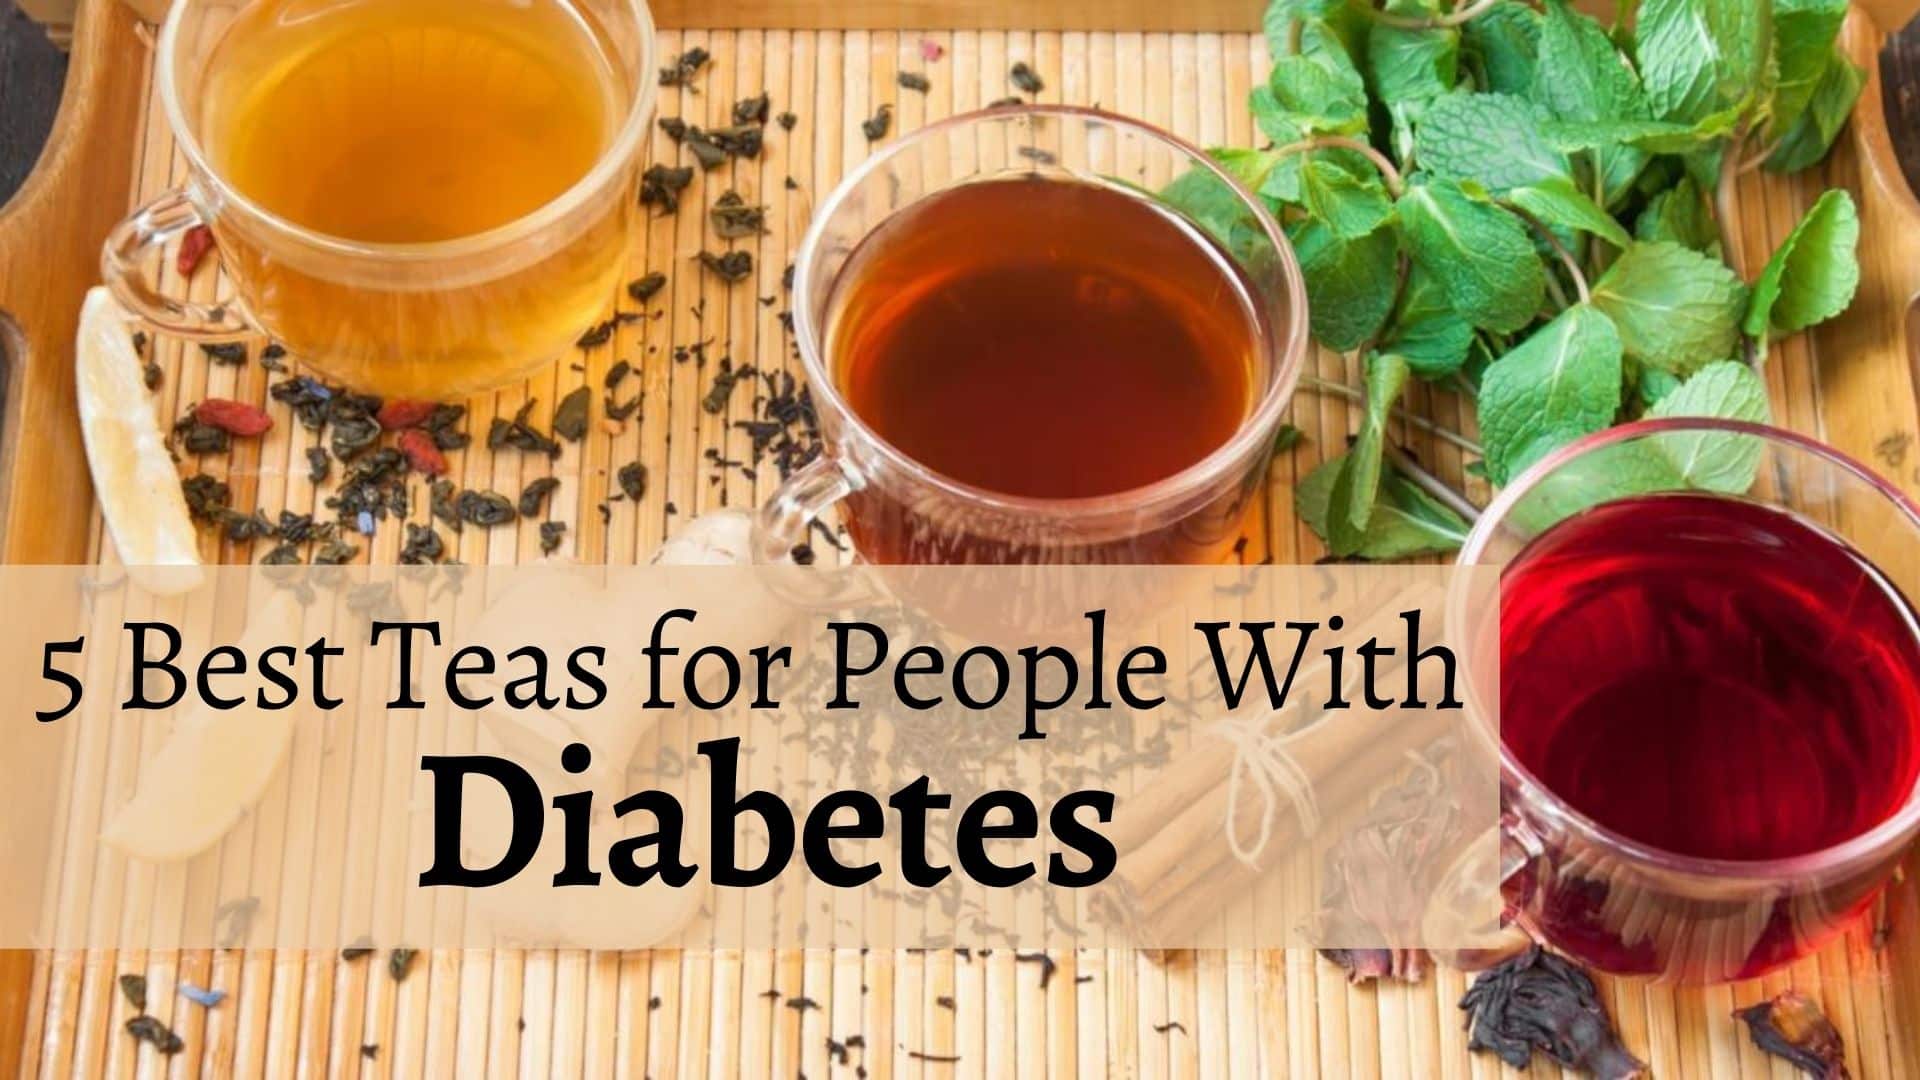 Diabetes Mellitus Management: 5 Best Teas To Control High Blood Sugar Spikes